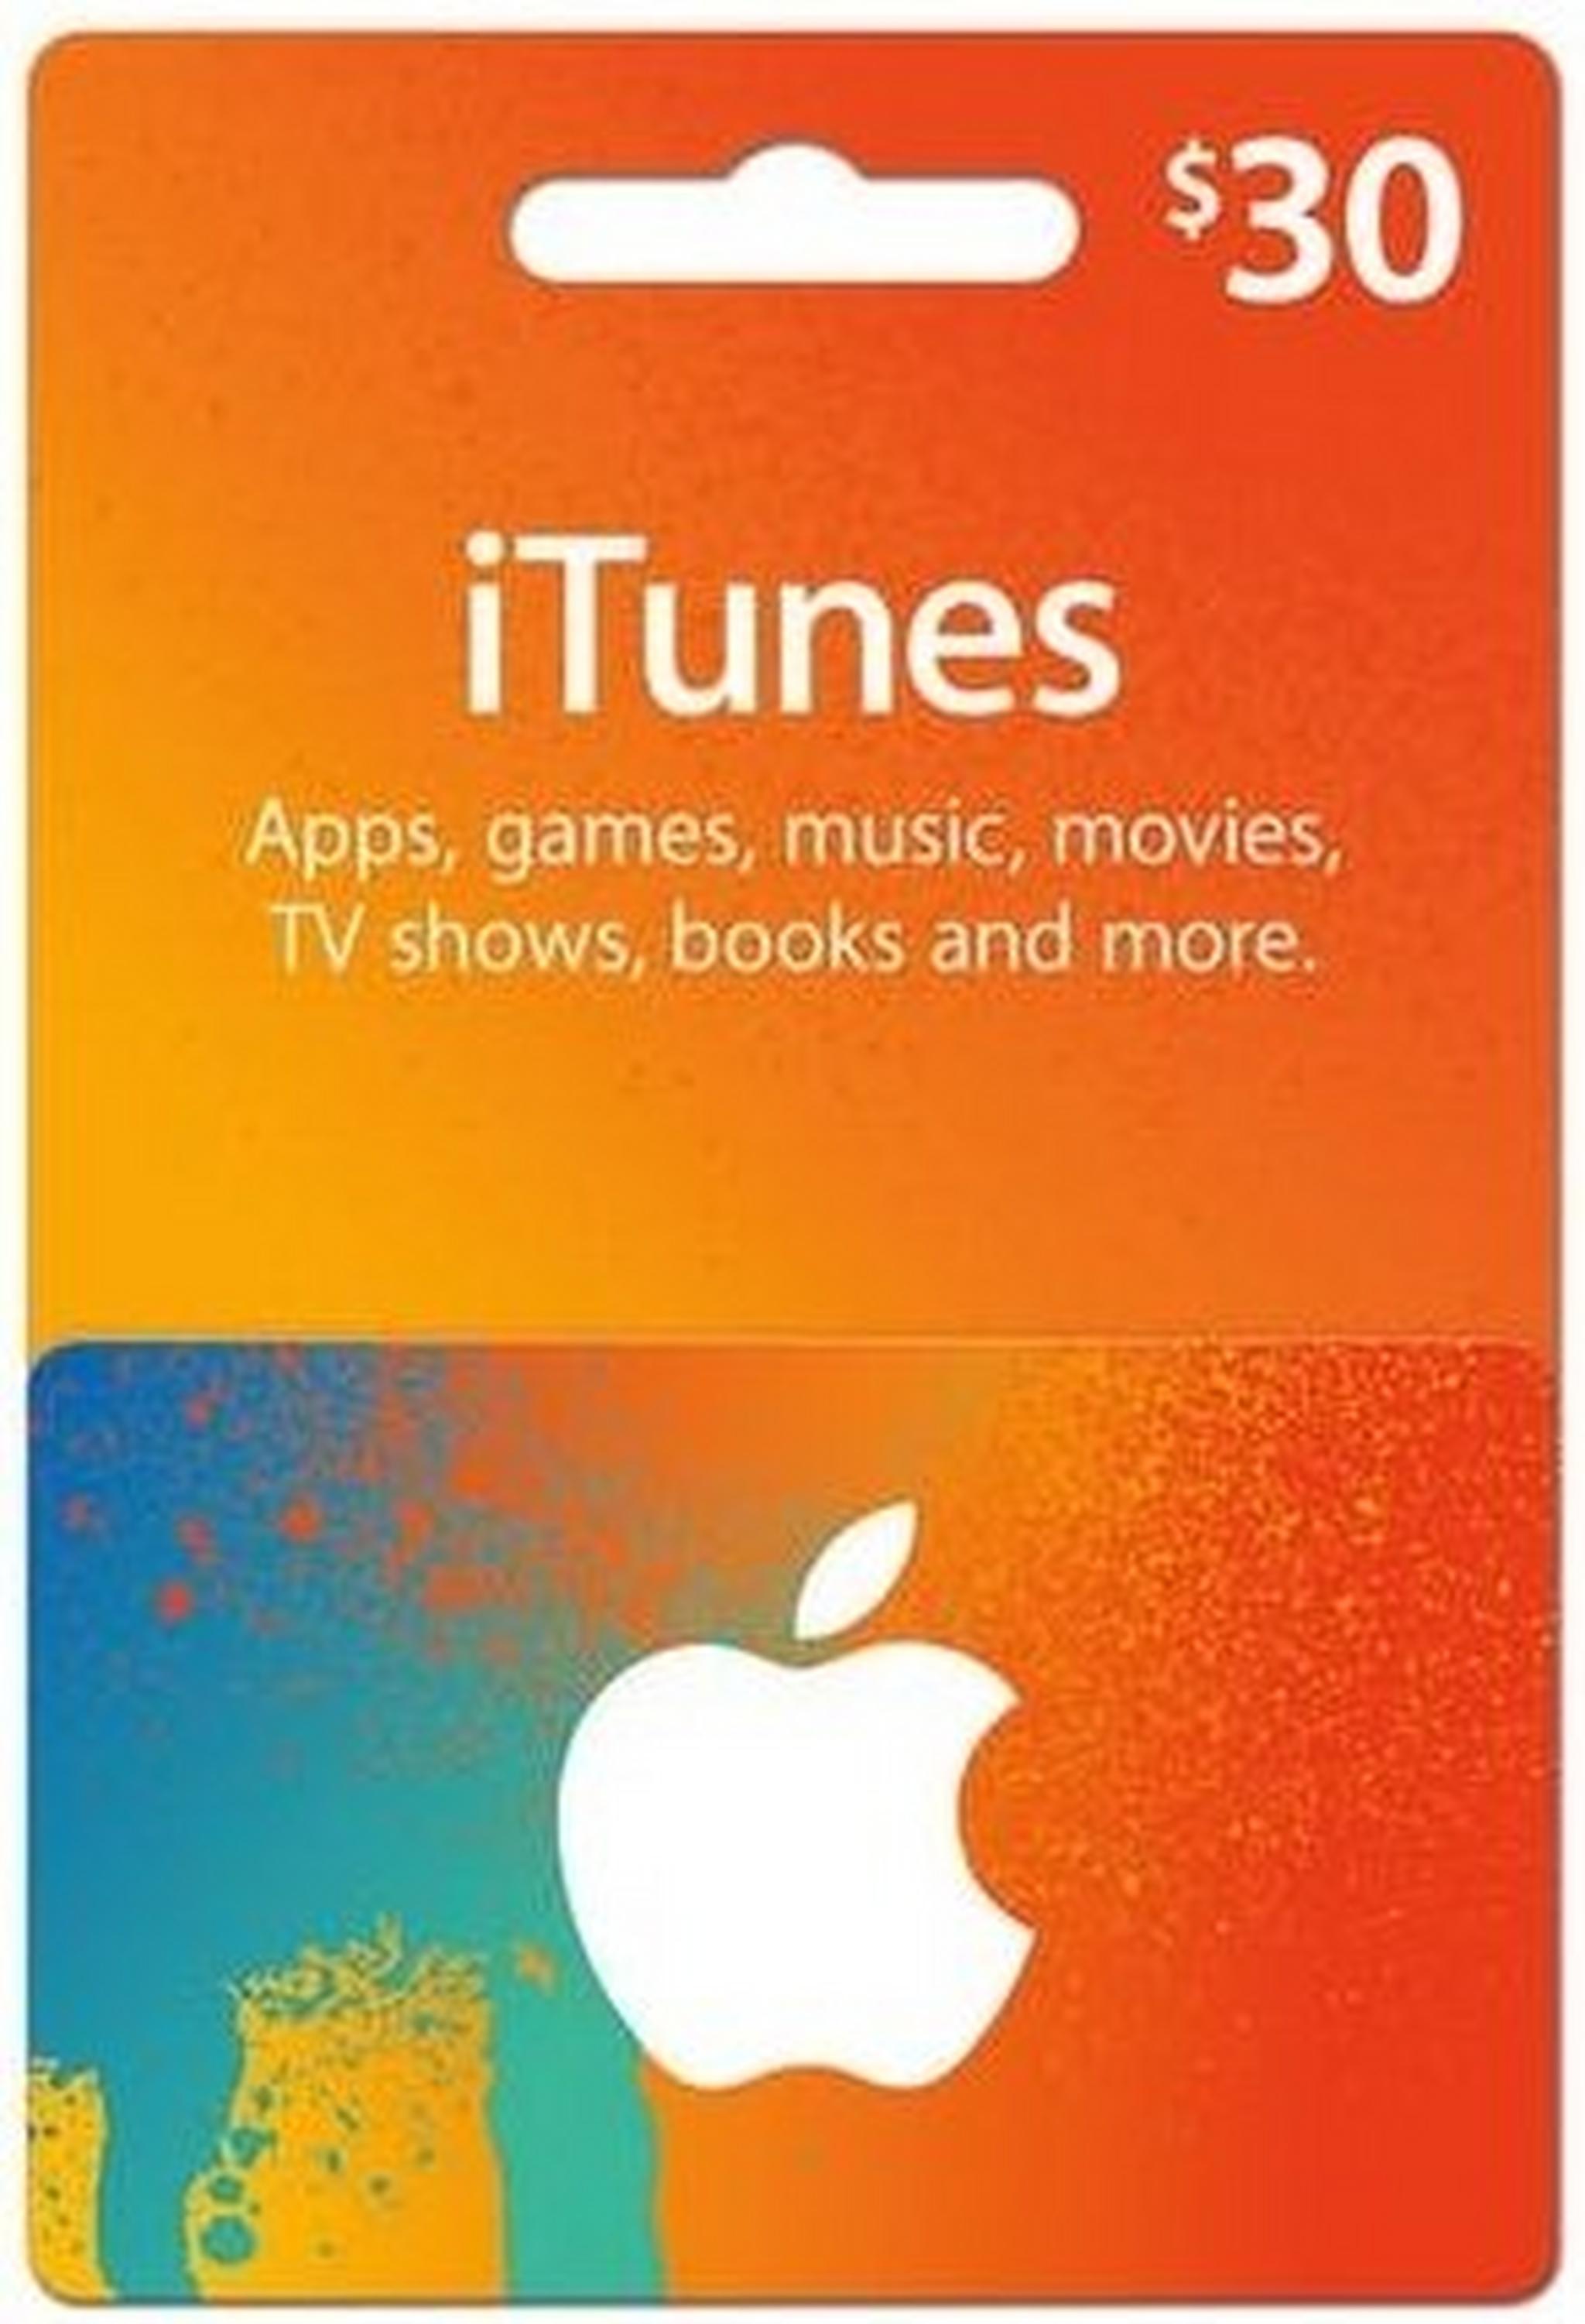 Apple iTunes Gift Card $30 (U.S. Account)